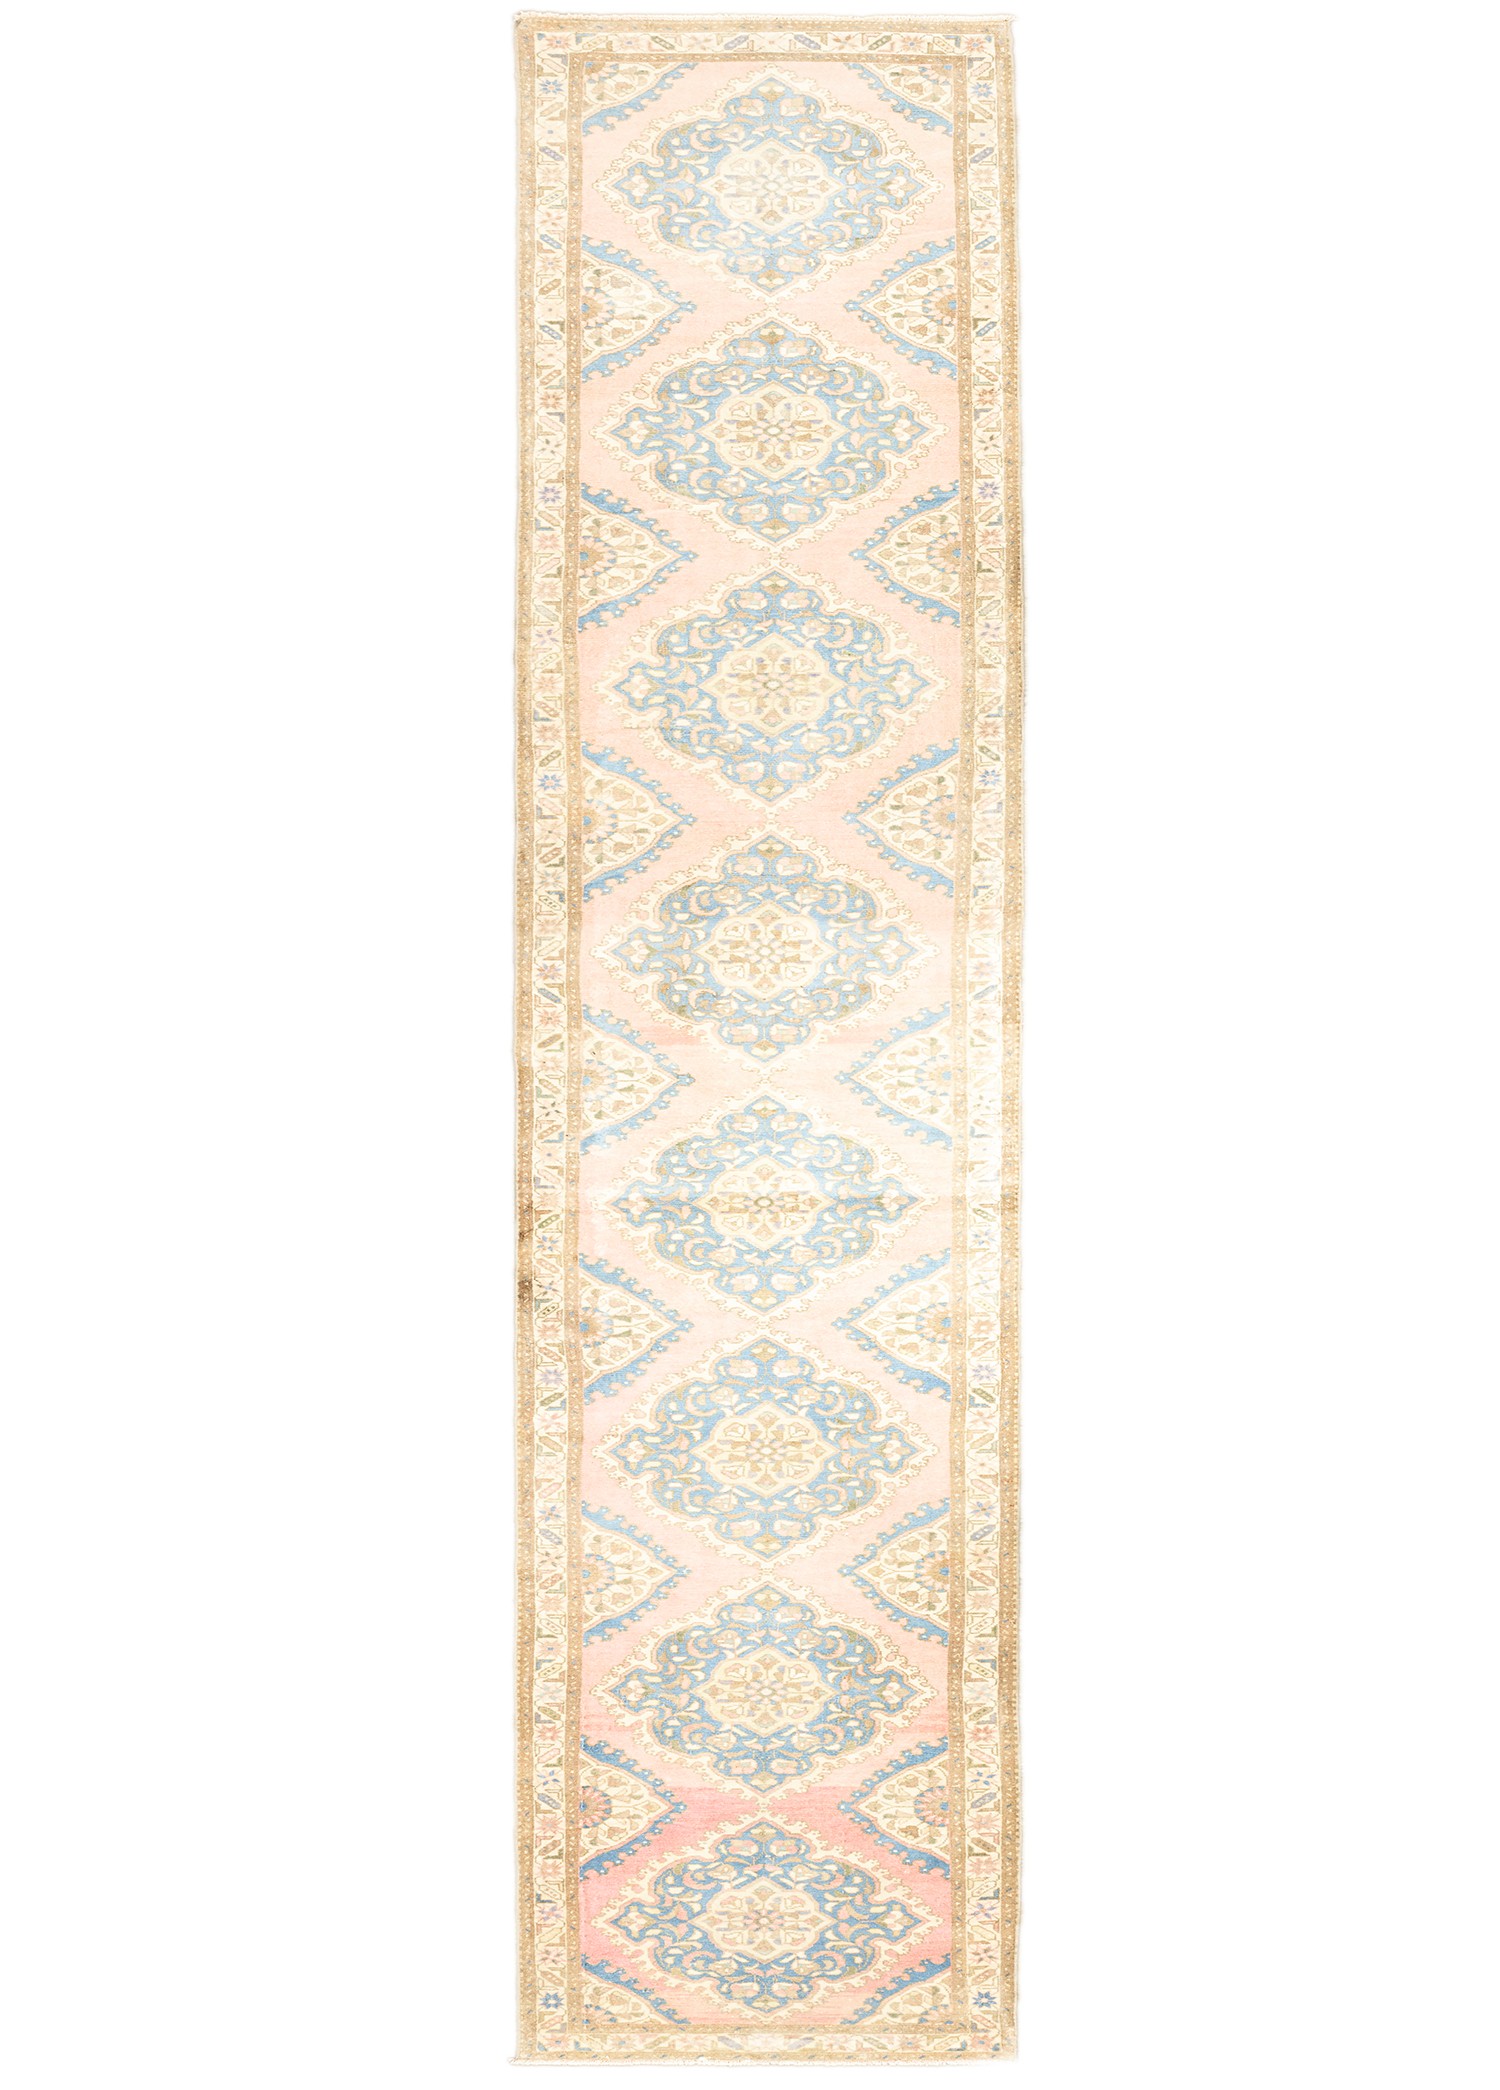 Erdebil Oriental Design Hand-Woven Persian Runner Rug 76x576 cm